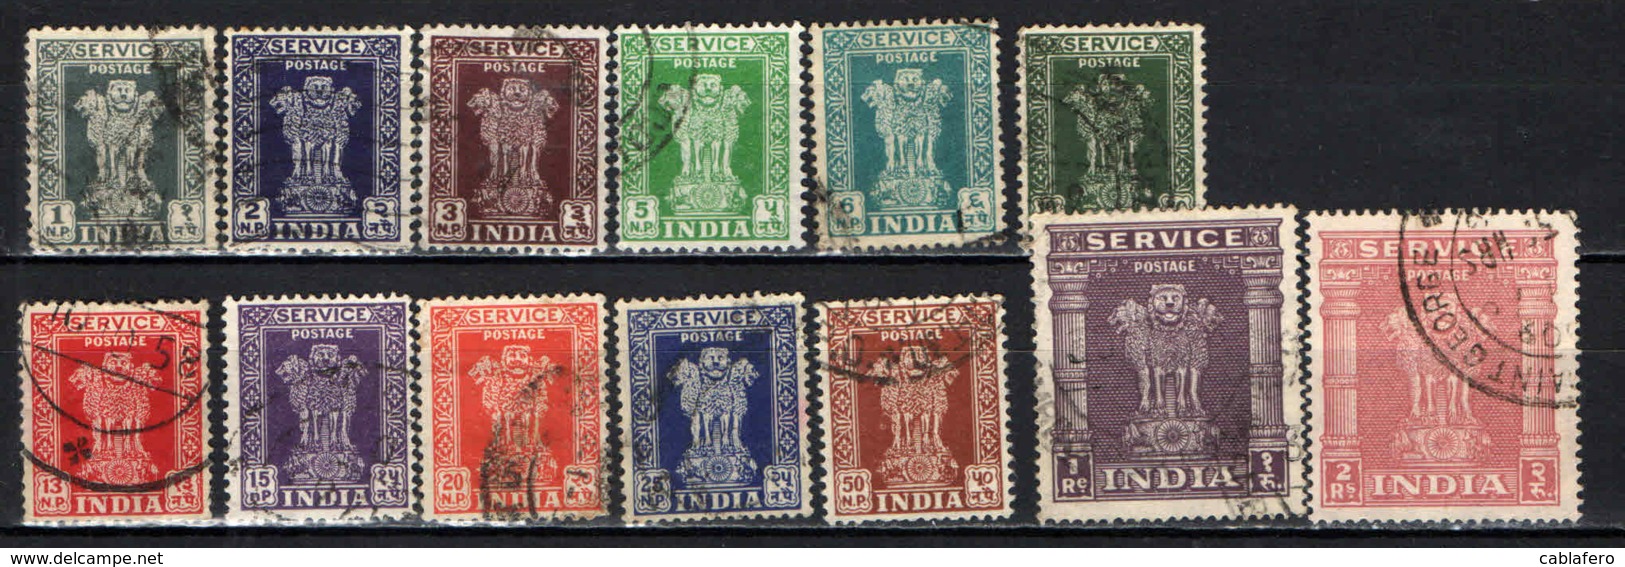 INDIA - 1958 - Capital Of Asoka Pillar - VALORI IN NP - FILIGRANA ASOKA PILLAR MULTIPLI - USATI - Sellos De Servicio